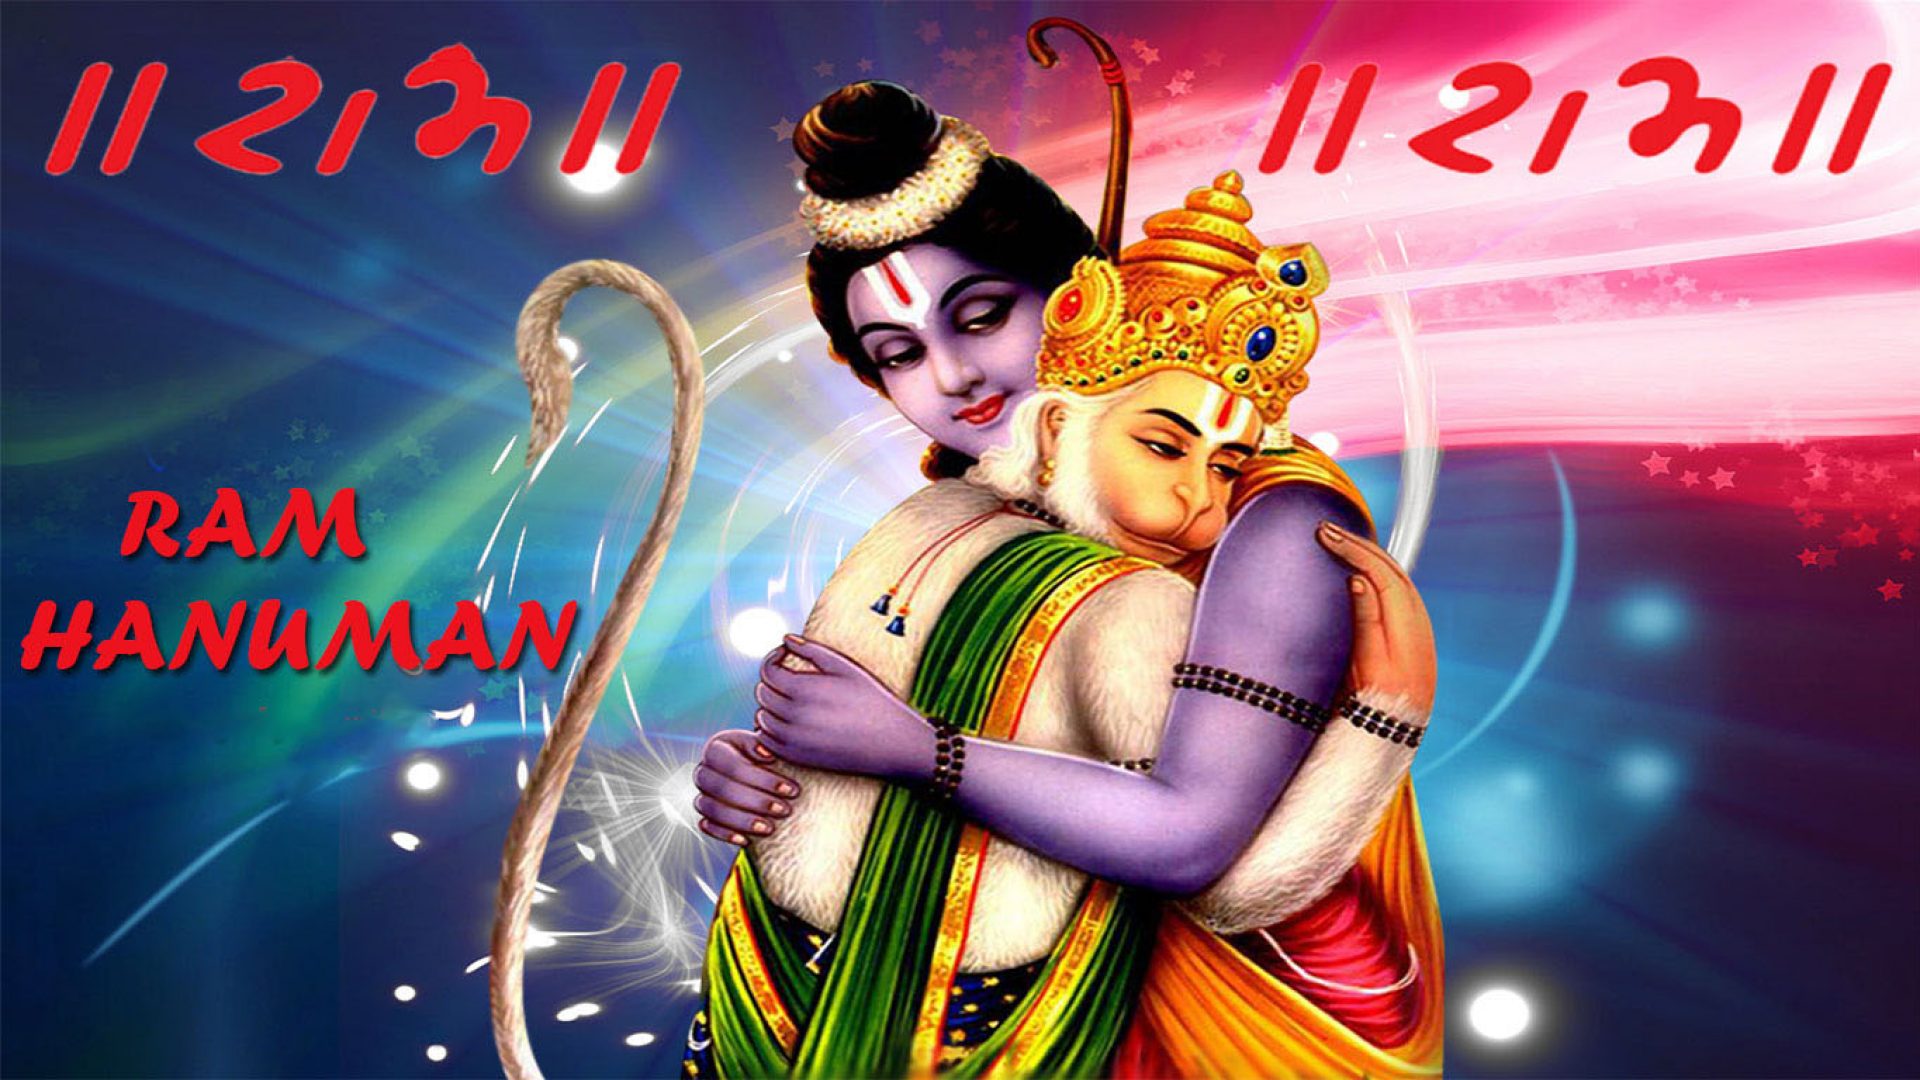 Ram Hanuman Wallpaper Free Download | Hindu Gods and Goddesses